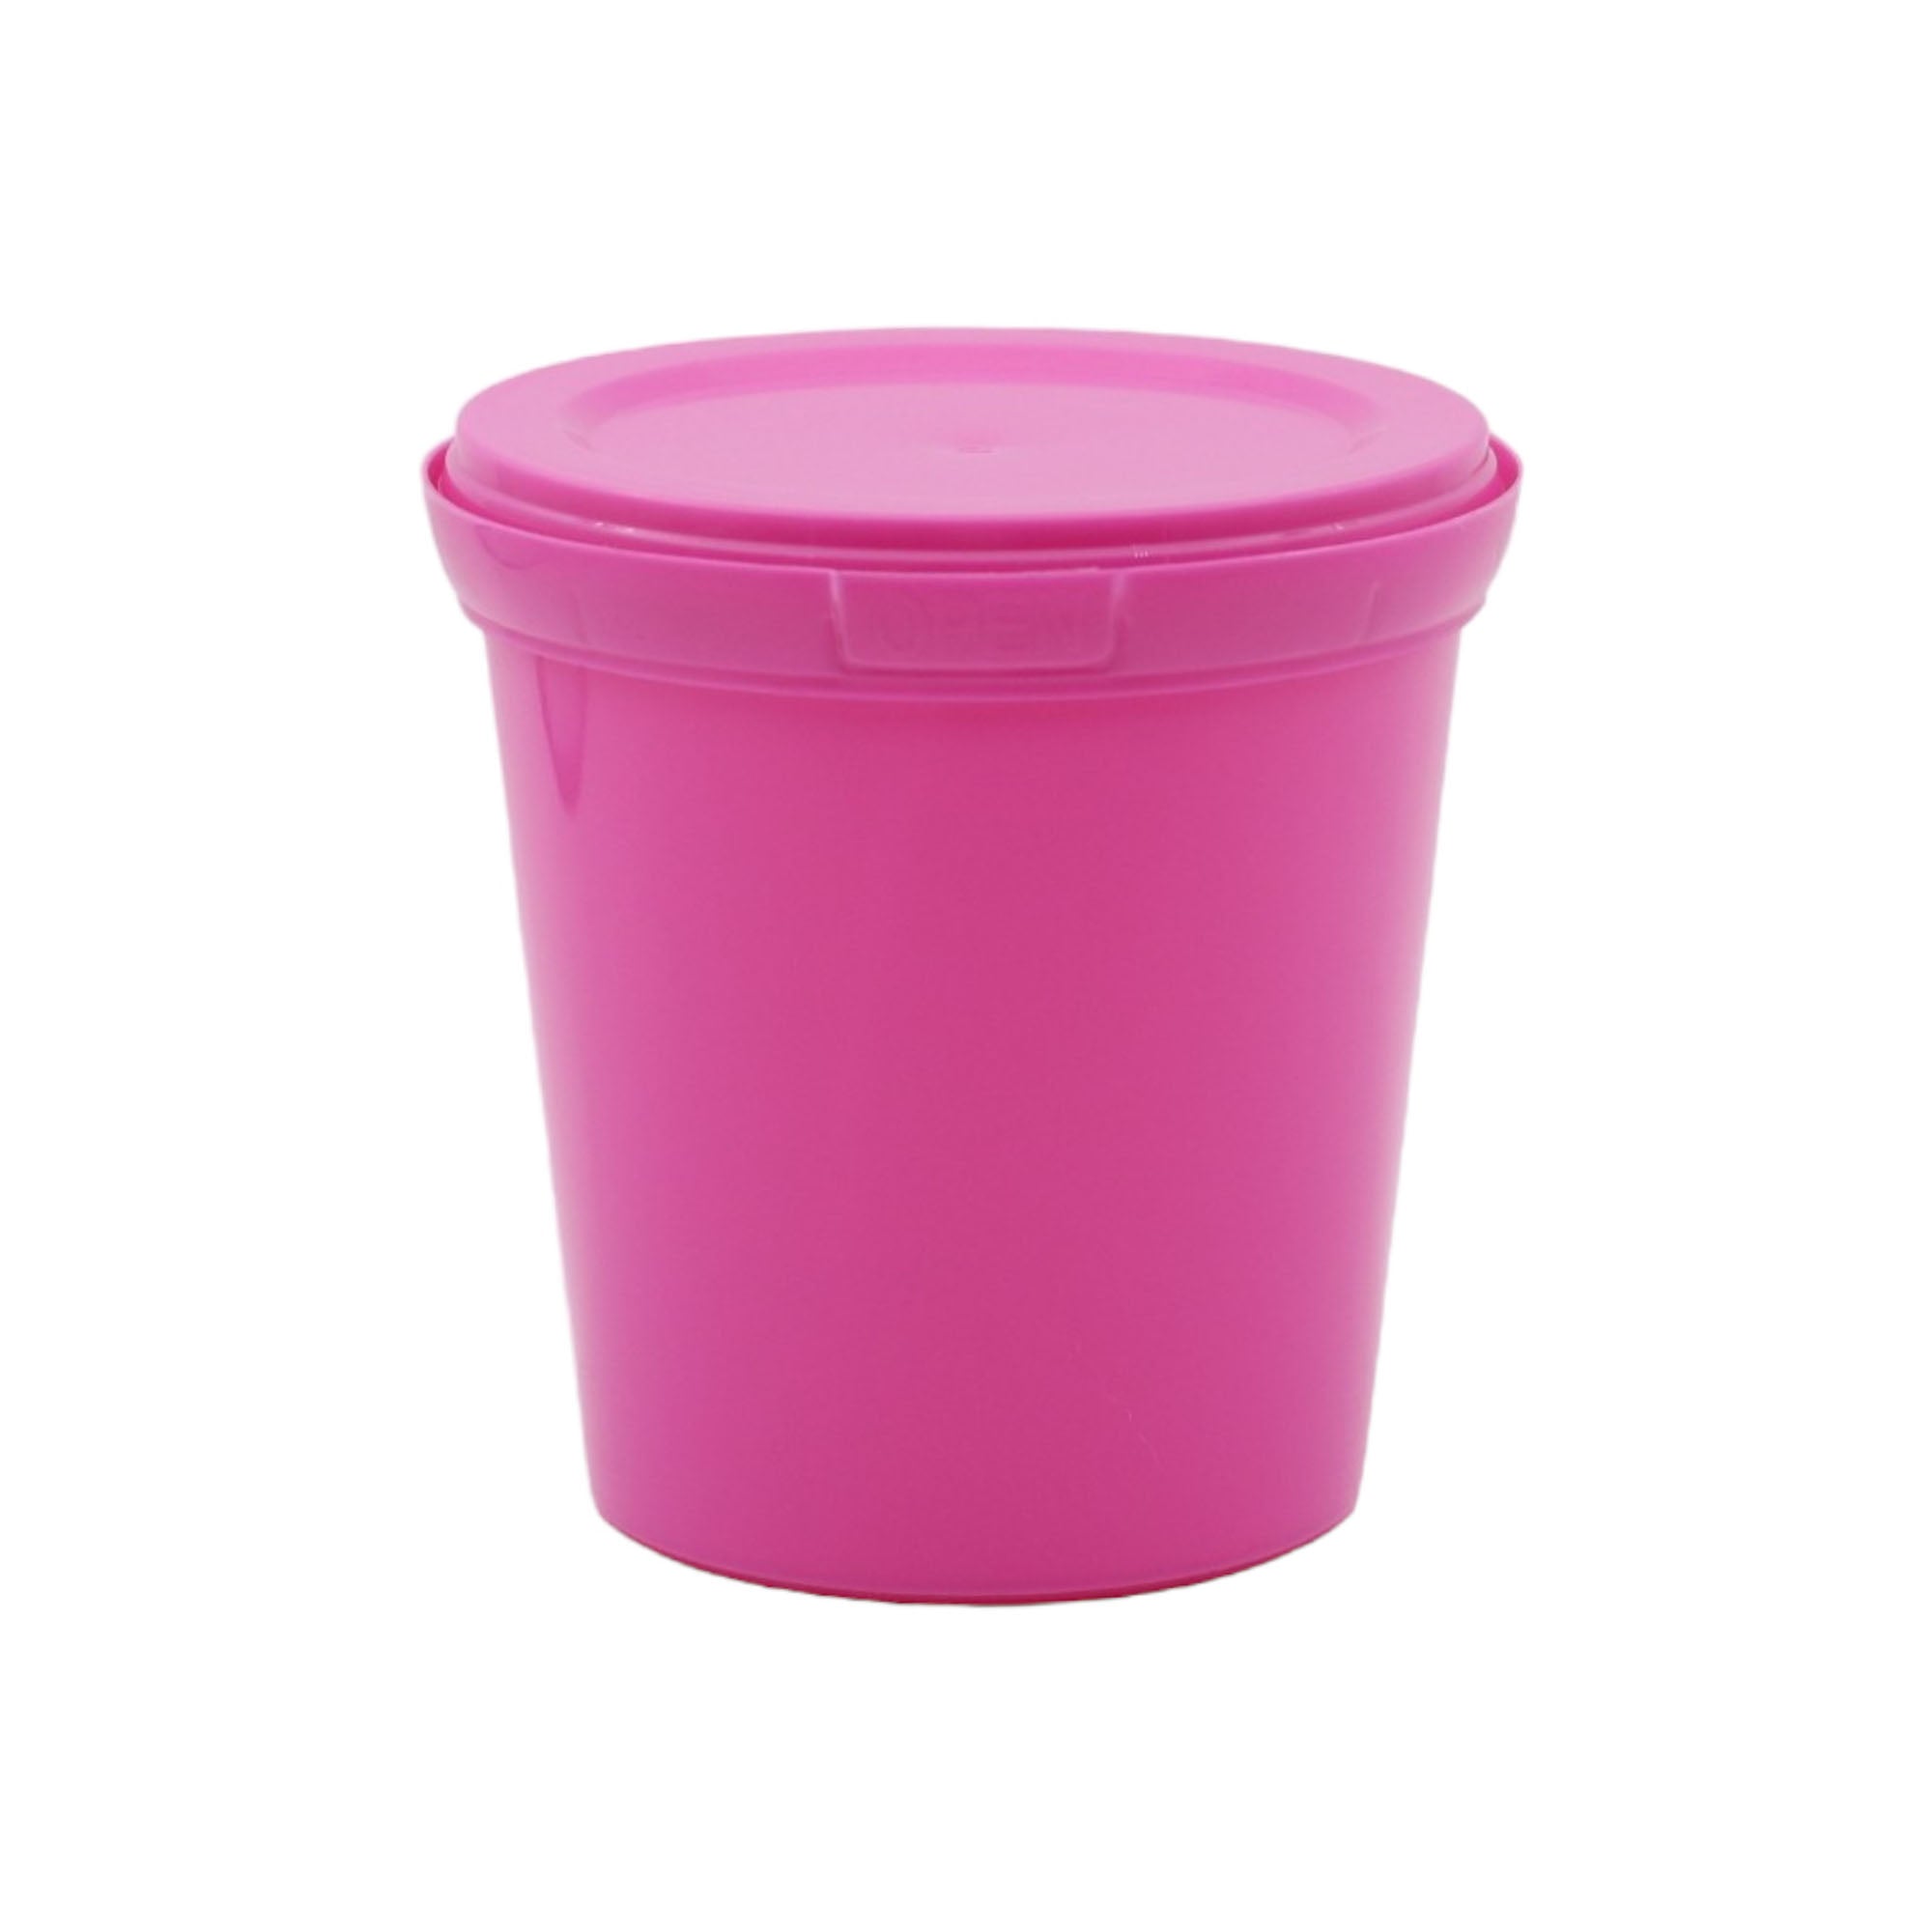 500ml Plastic Bucket with Lid